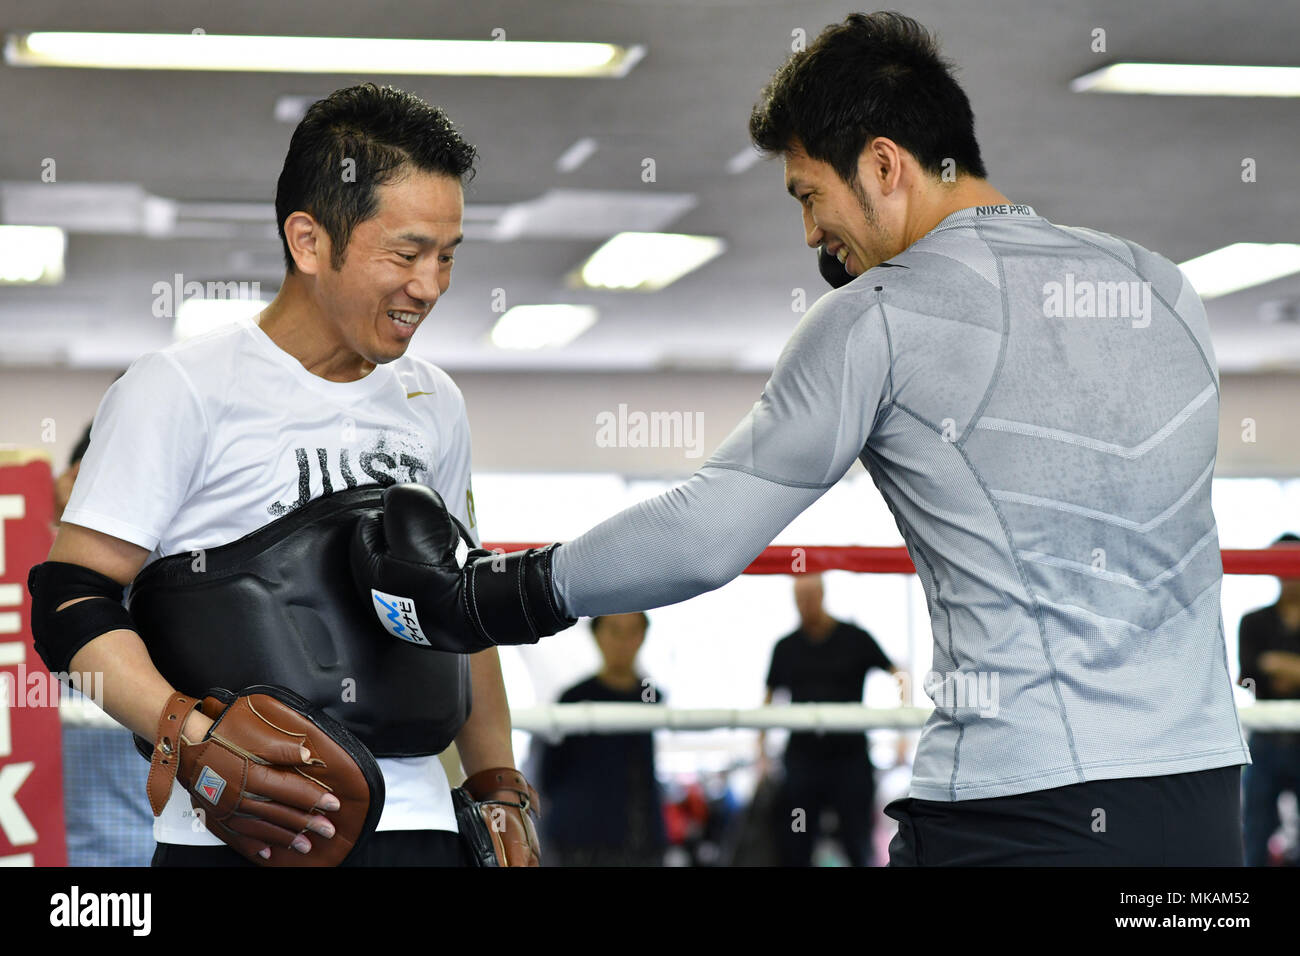 Tokyo, Japan. 7th May, 2018. (R-L) Ryota Murata, Sendai Tanaka Boxing :  Ryota Murata of Japan trains with trainer Sendai Tanaka during a media  workout at Teiken Boxing Gym in Tokyo, Japan .